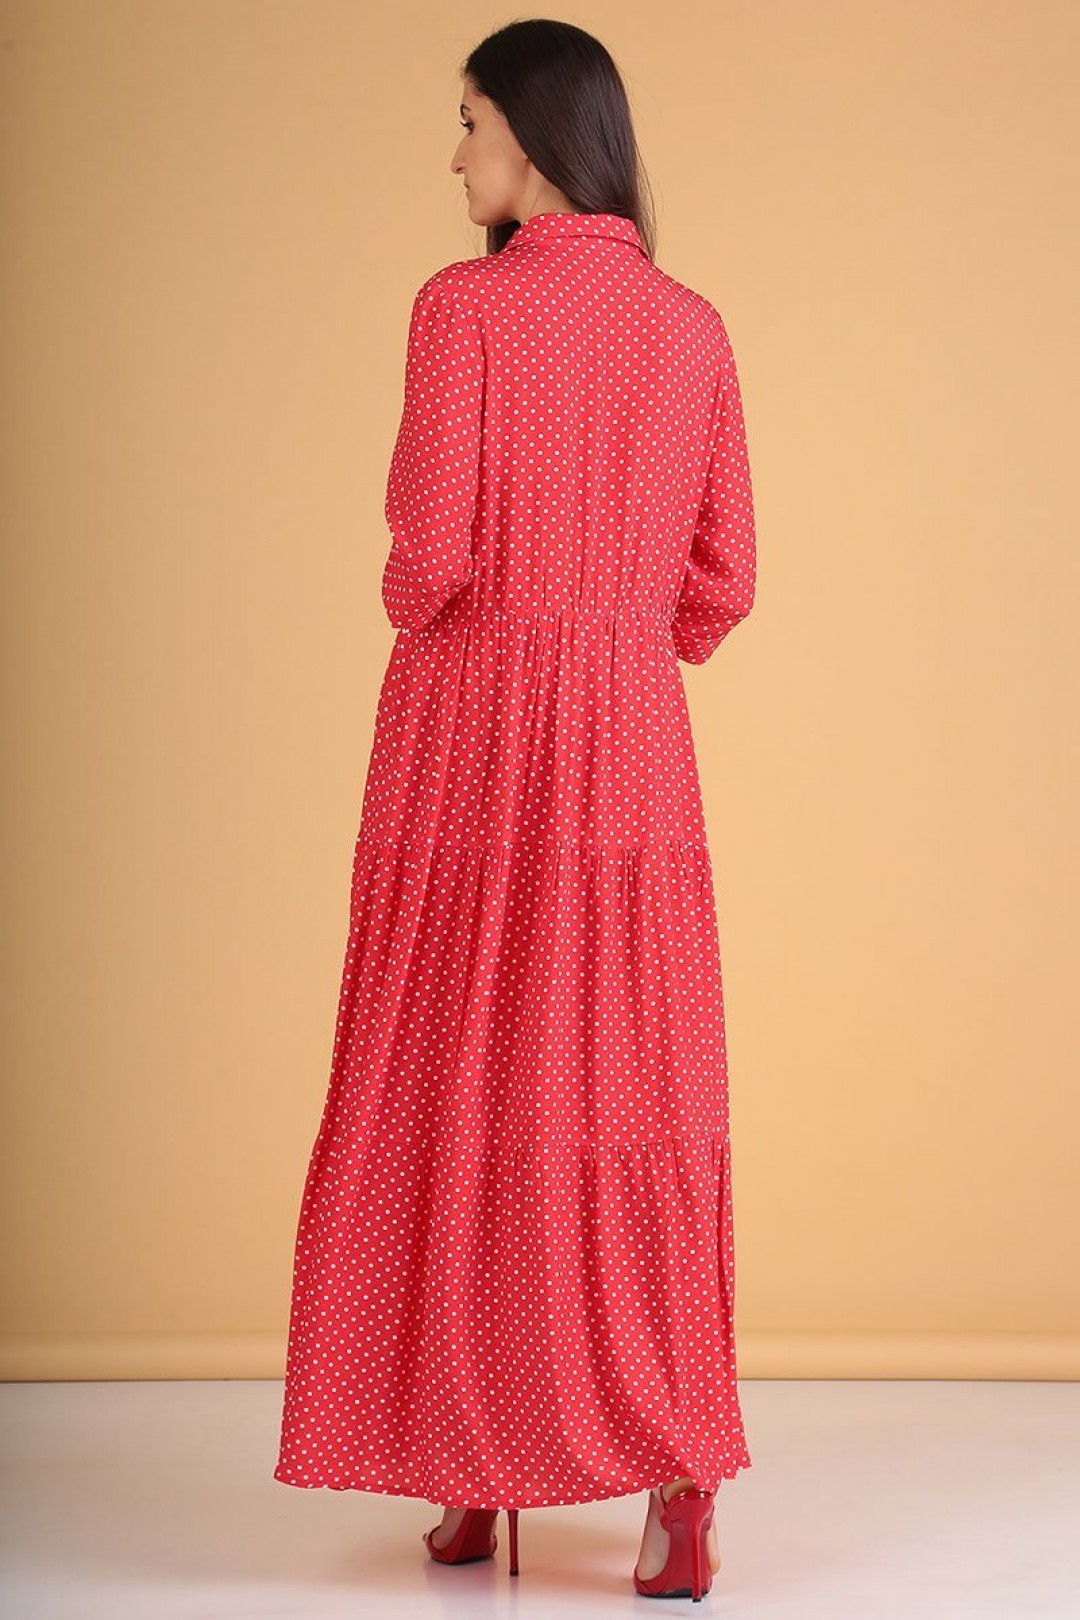 Платье Celentano 1882-1 алый, горох